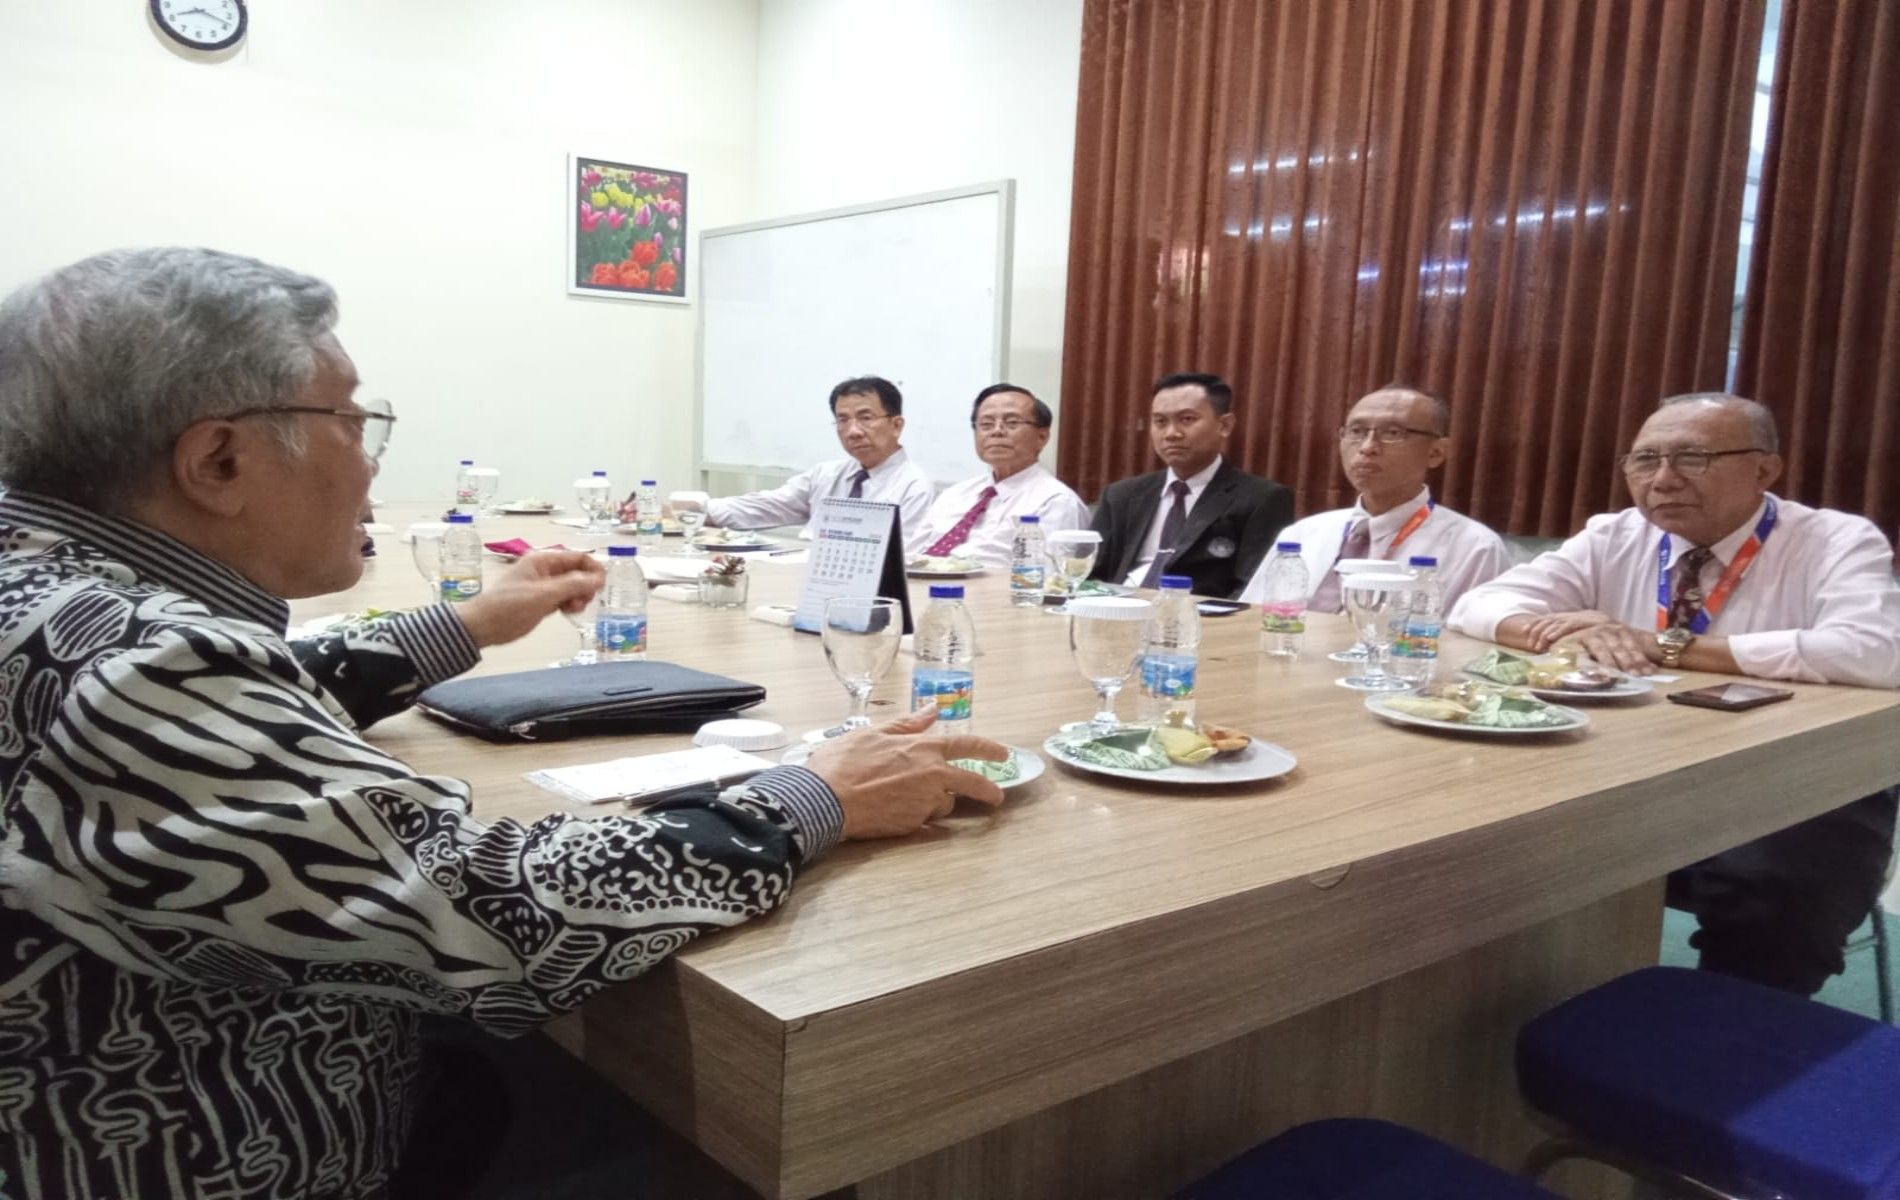 Hafidh Asrom berdiskusi dengan pimpinan Sekolah Tinggi Pariwisata Ambarrukmo Yogyakarta.